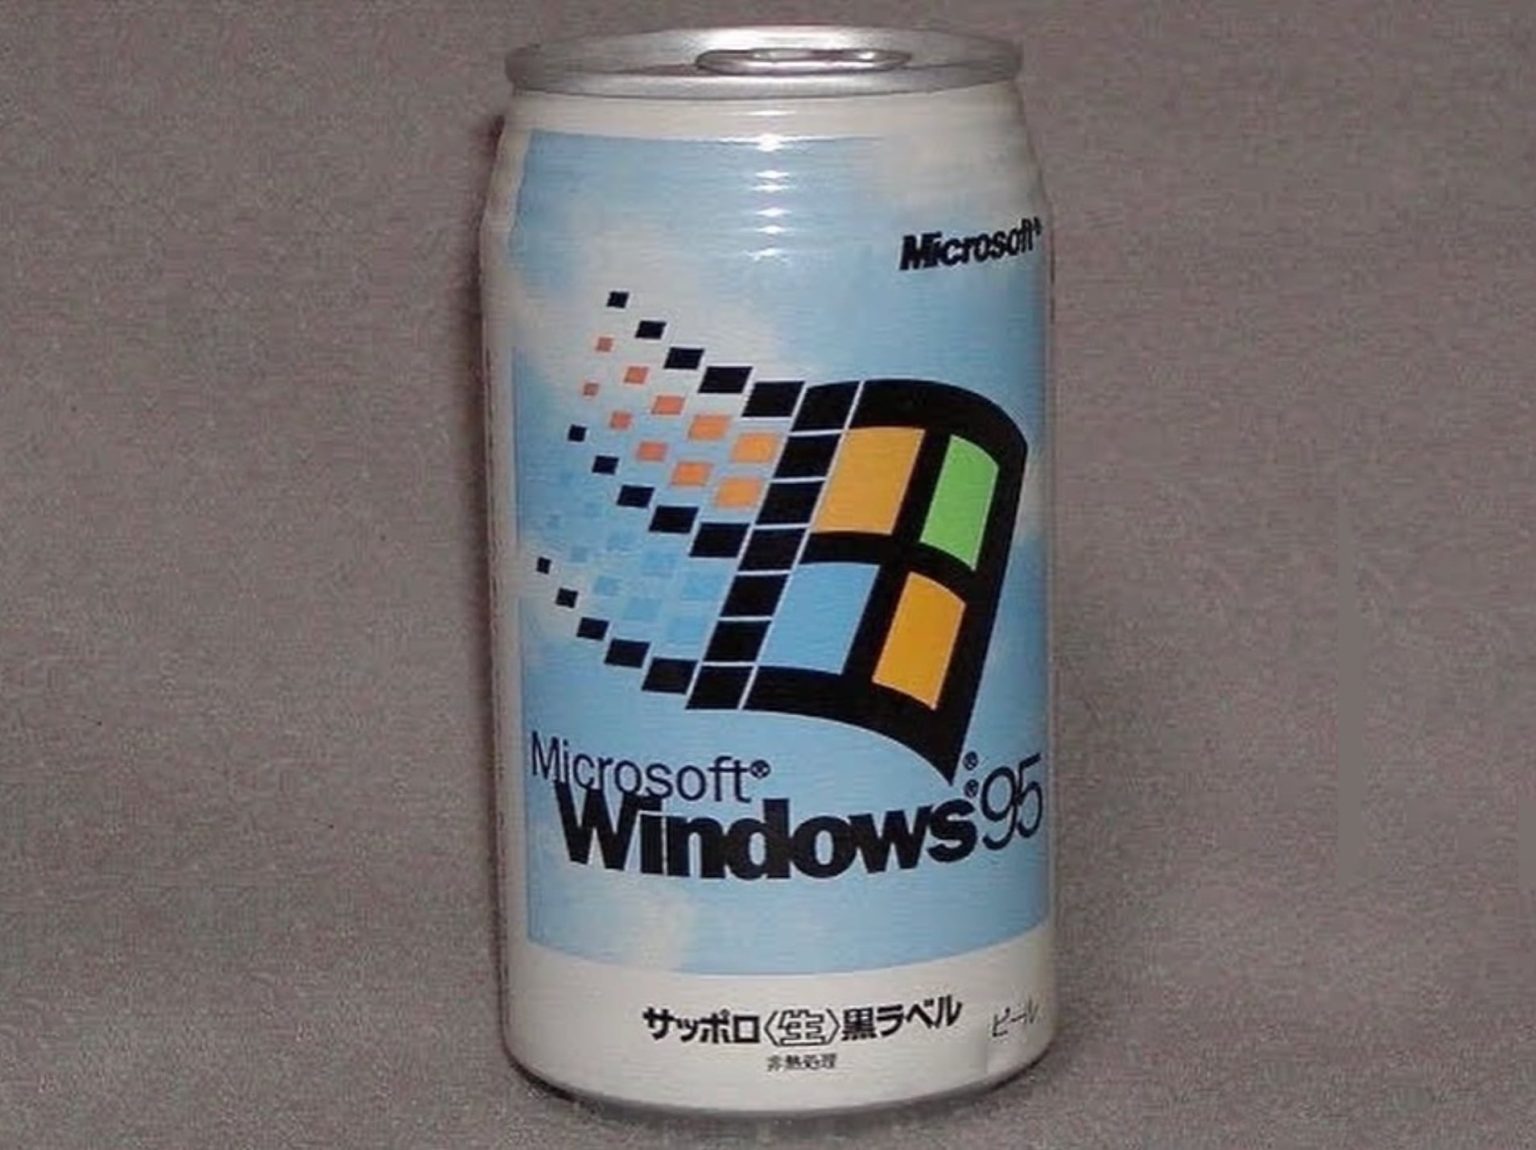 Windows95 Soft Drink